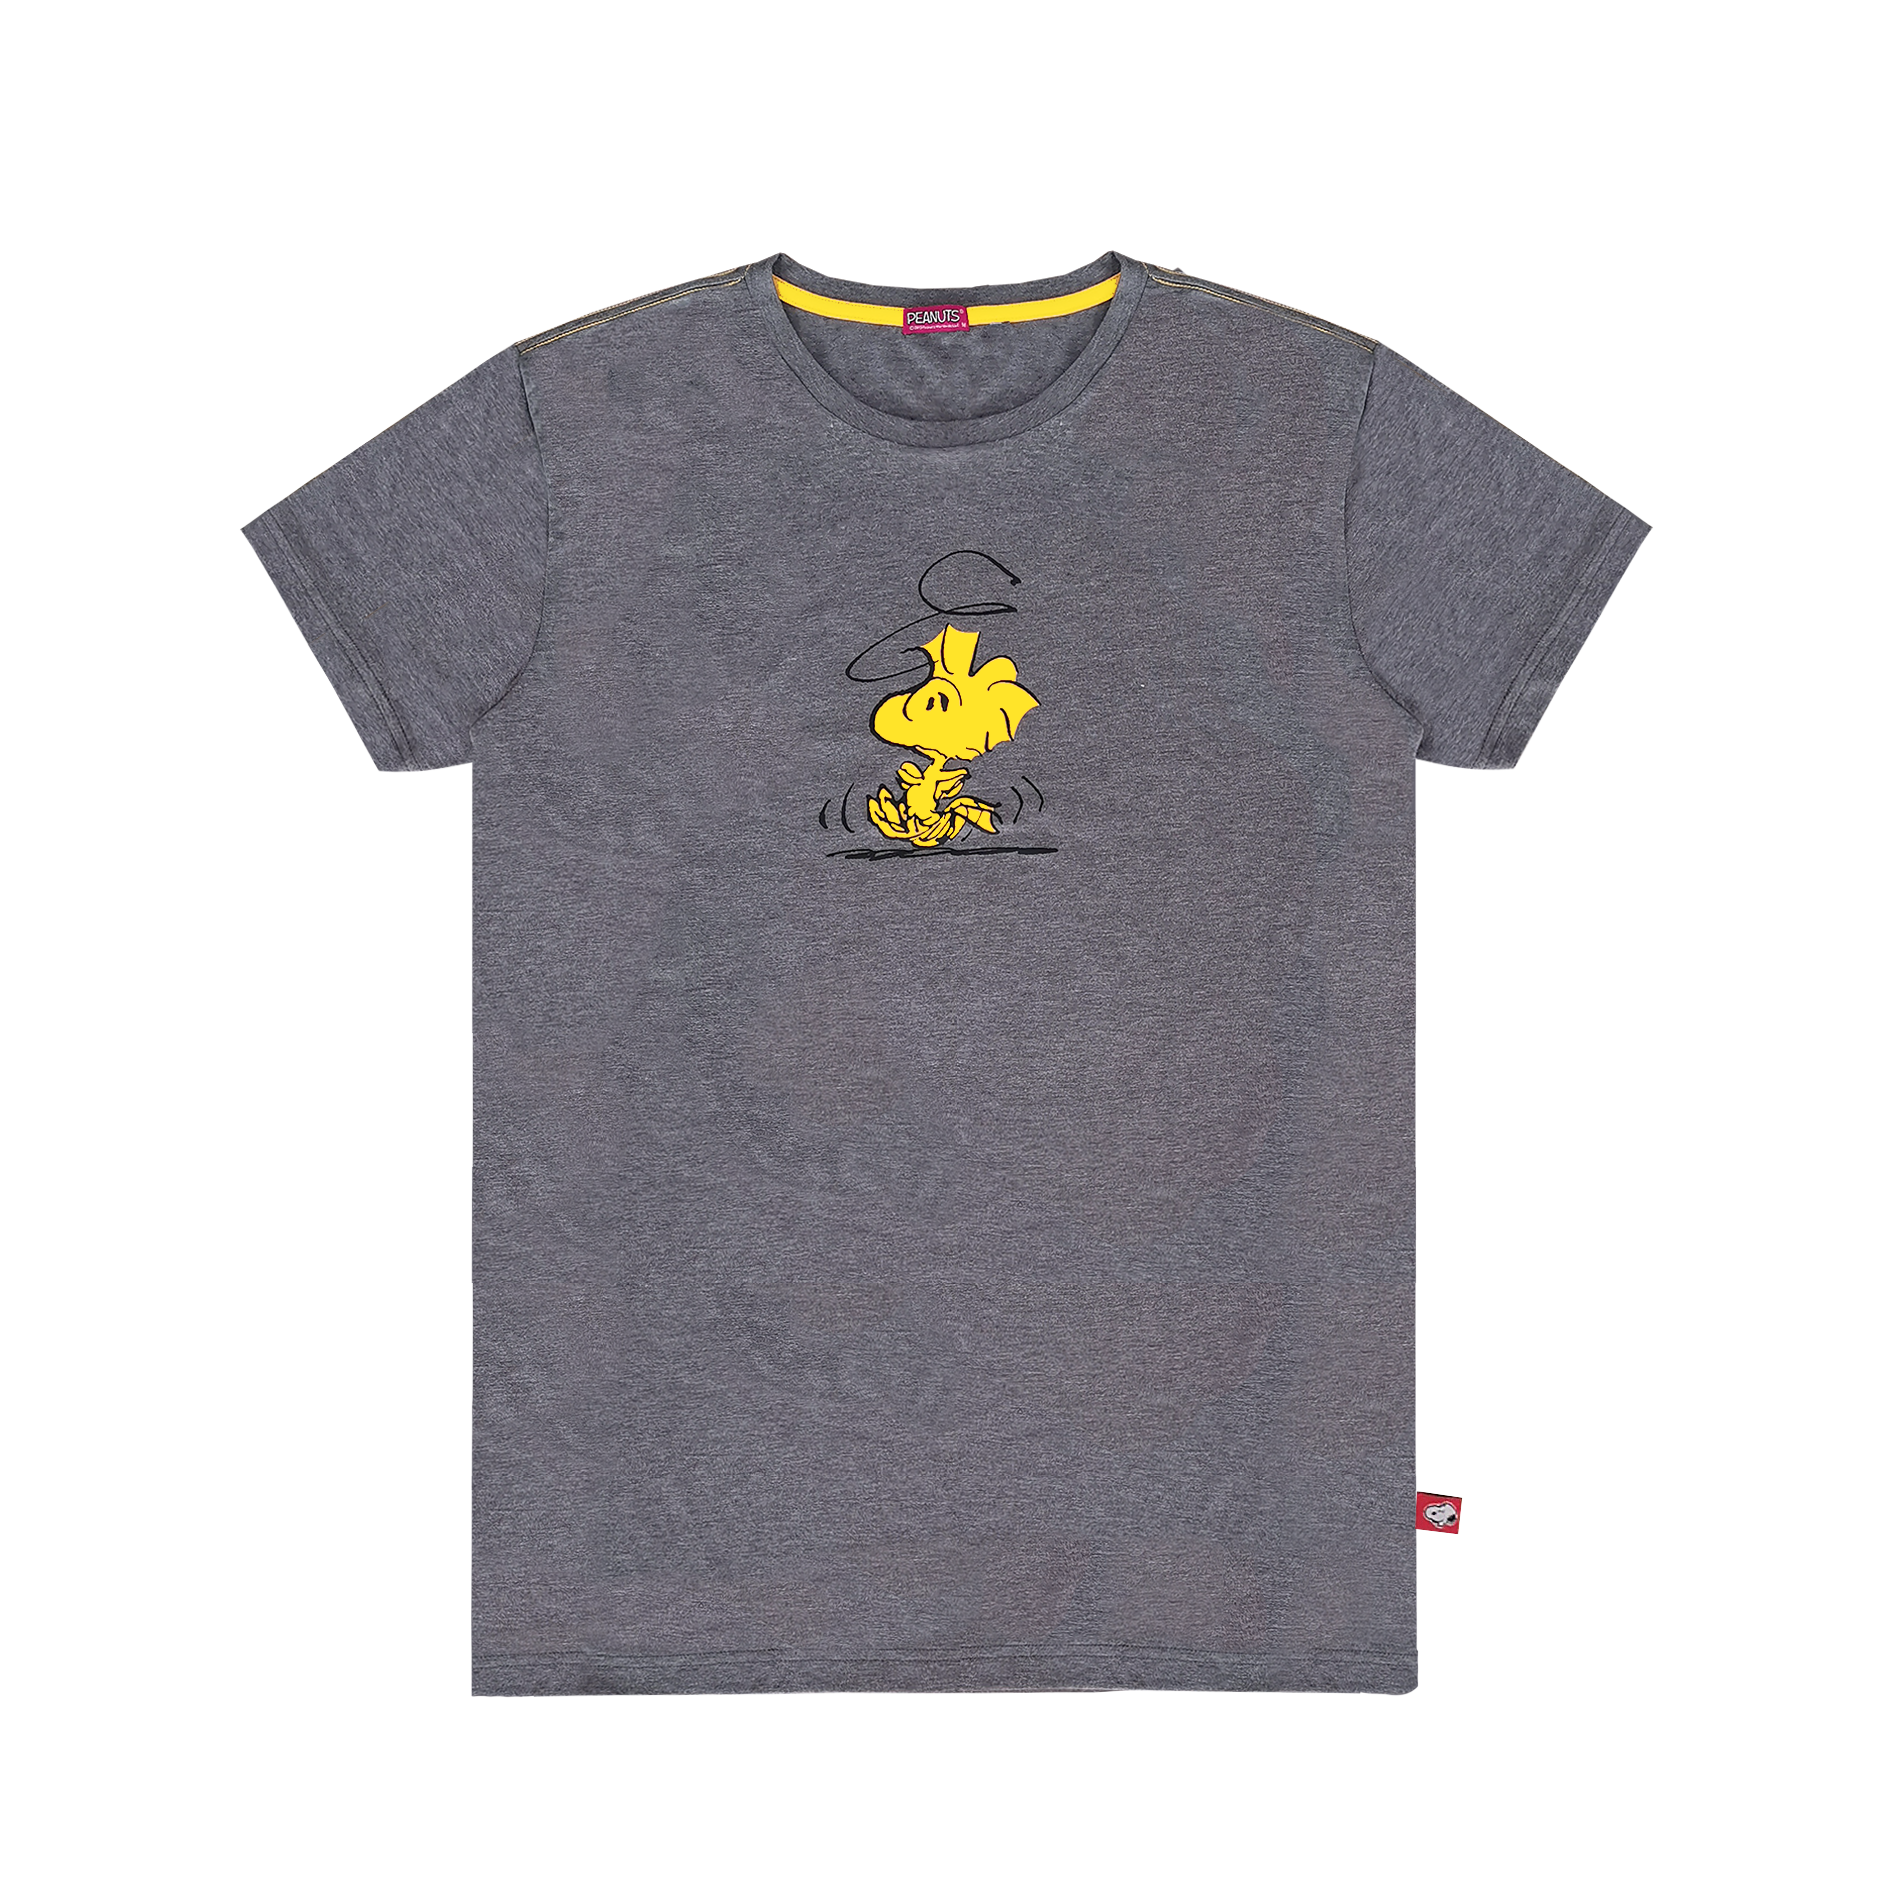 Peanuts Unisex Graphic T-Shirt I COMMON SENSE